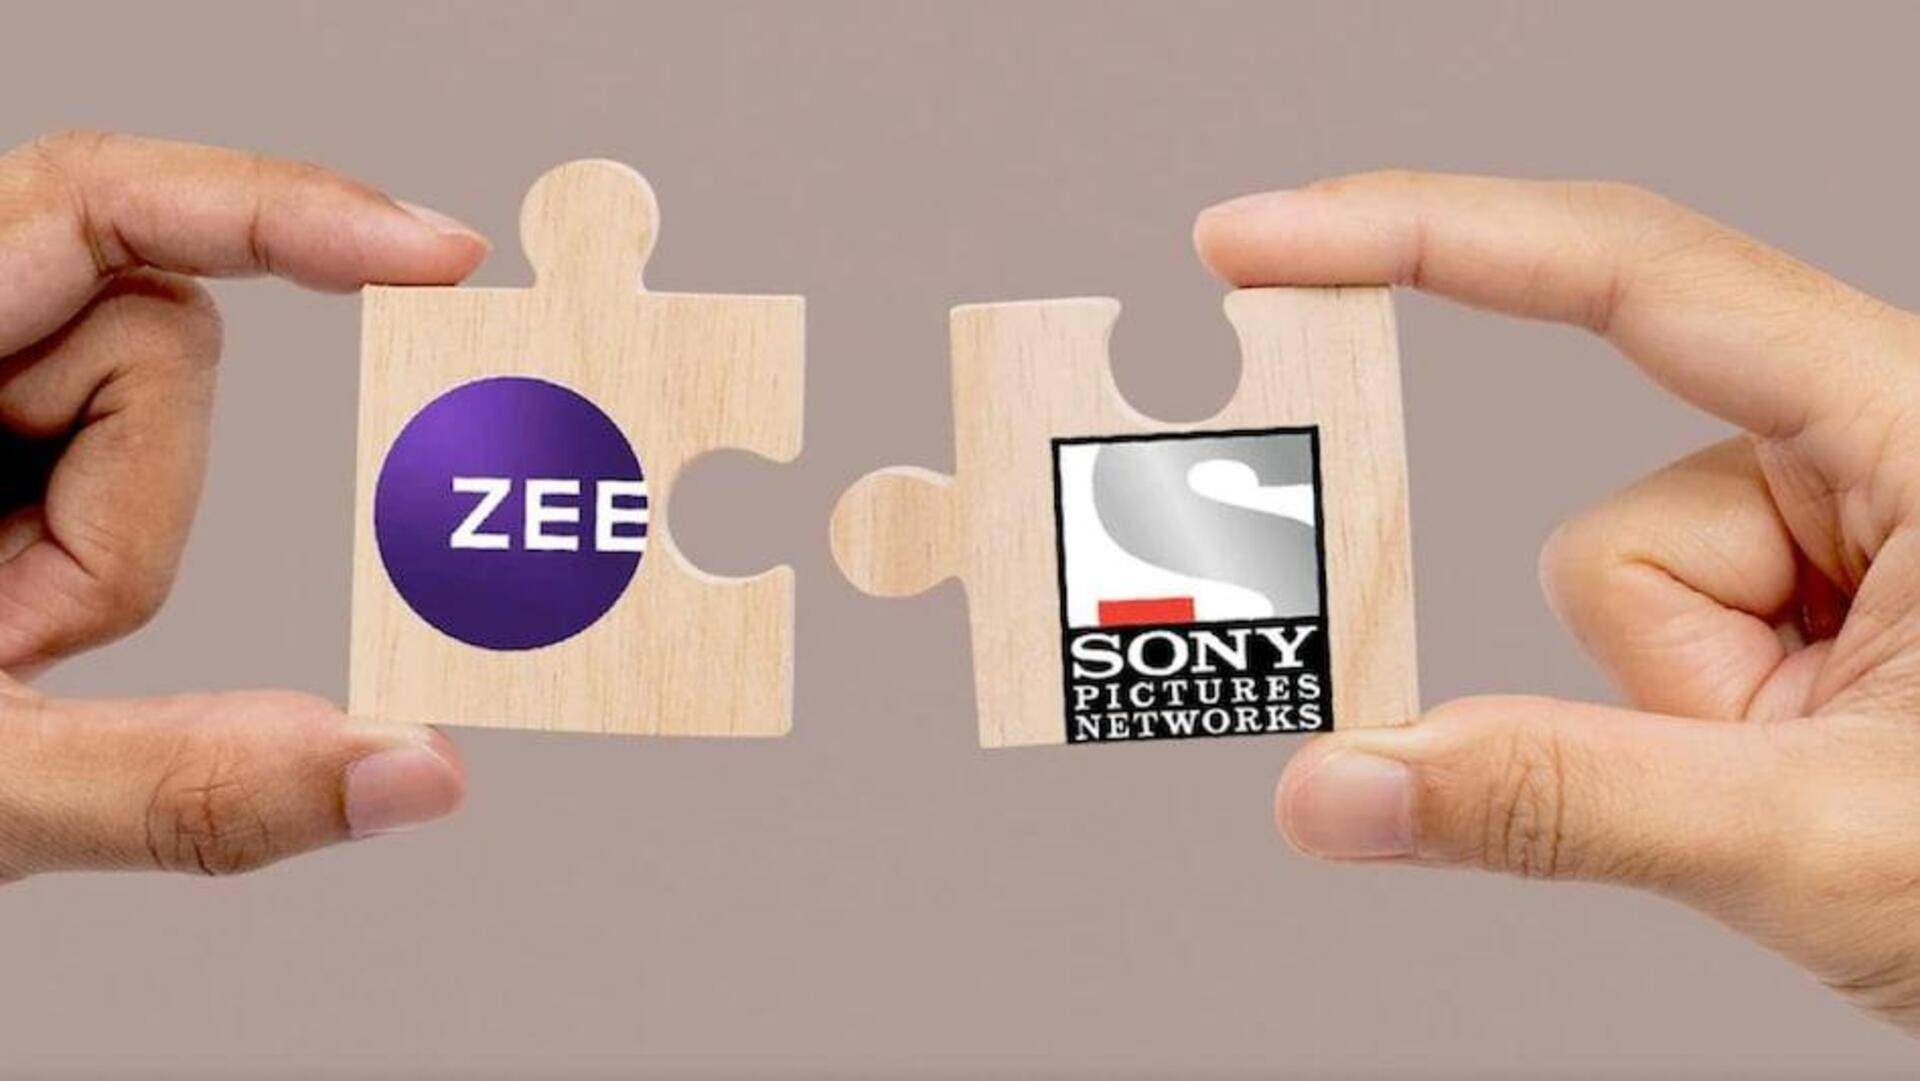 Sony-Zee merger: NCLT asks Sony to respond in 3 weeks